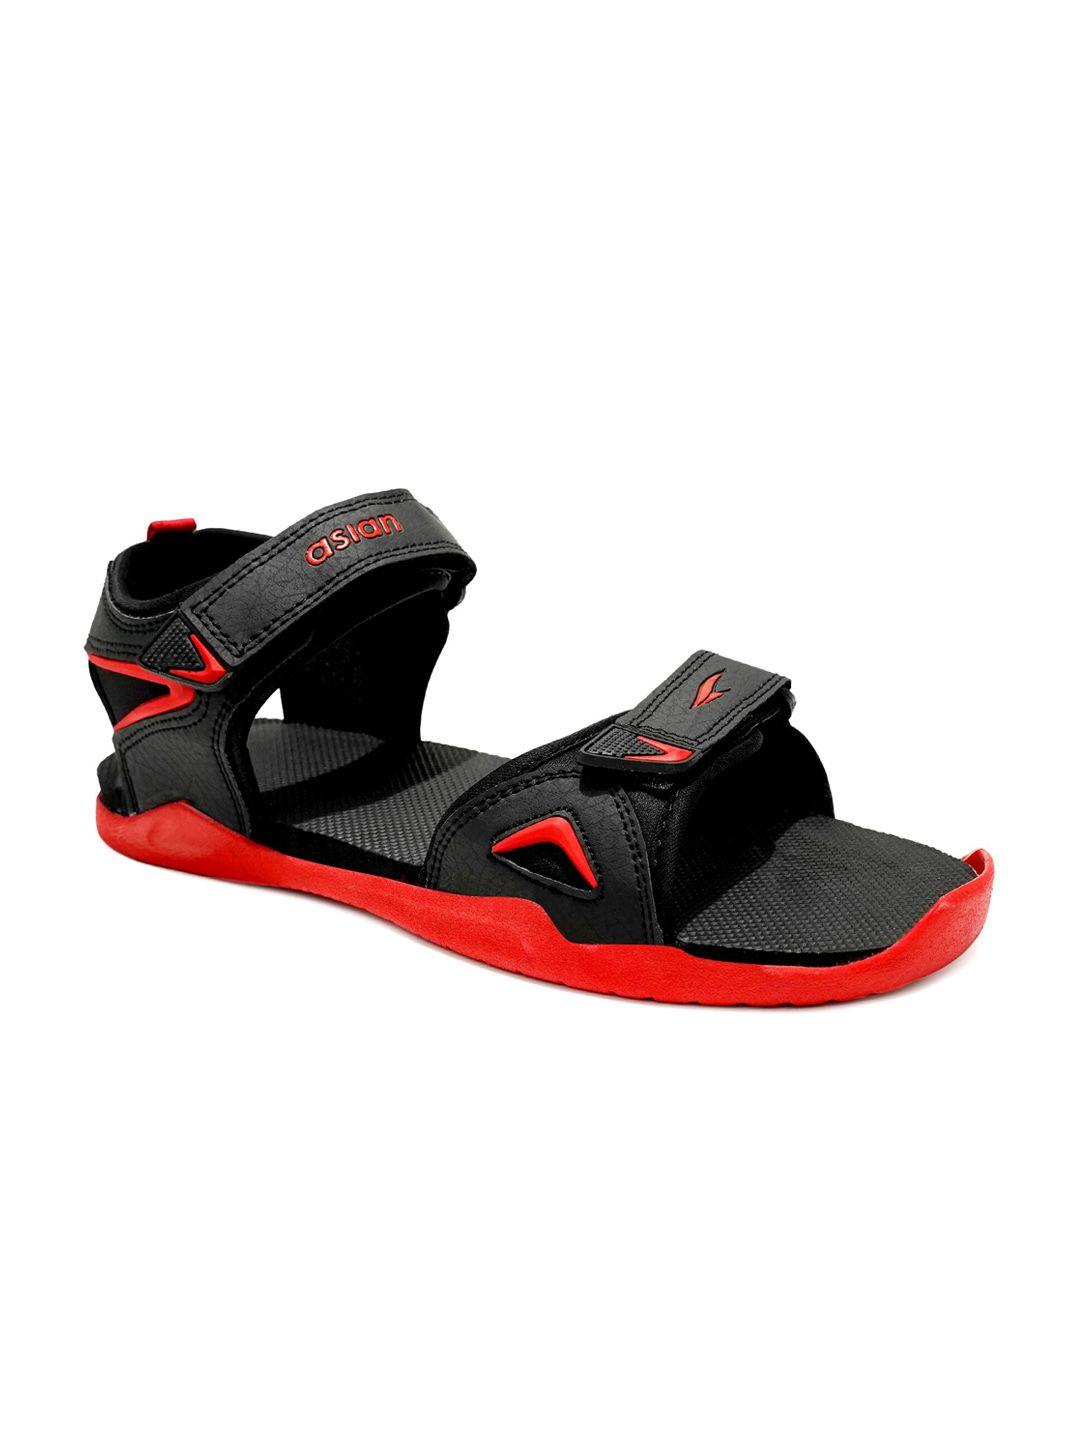 asian-men-infinity-12-textured-sports-sandals